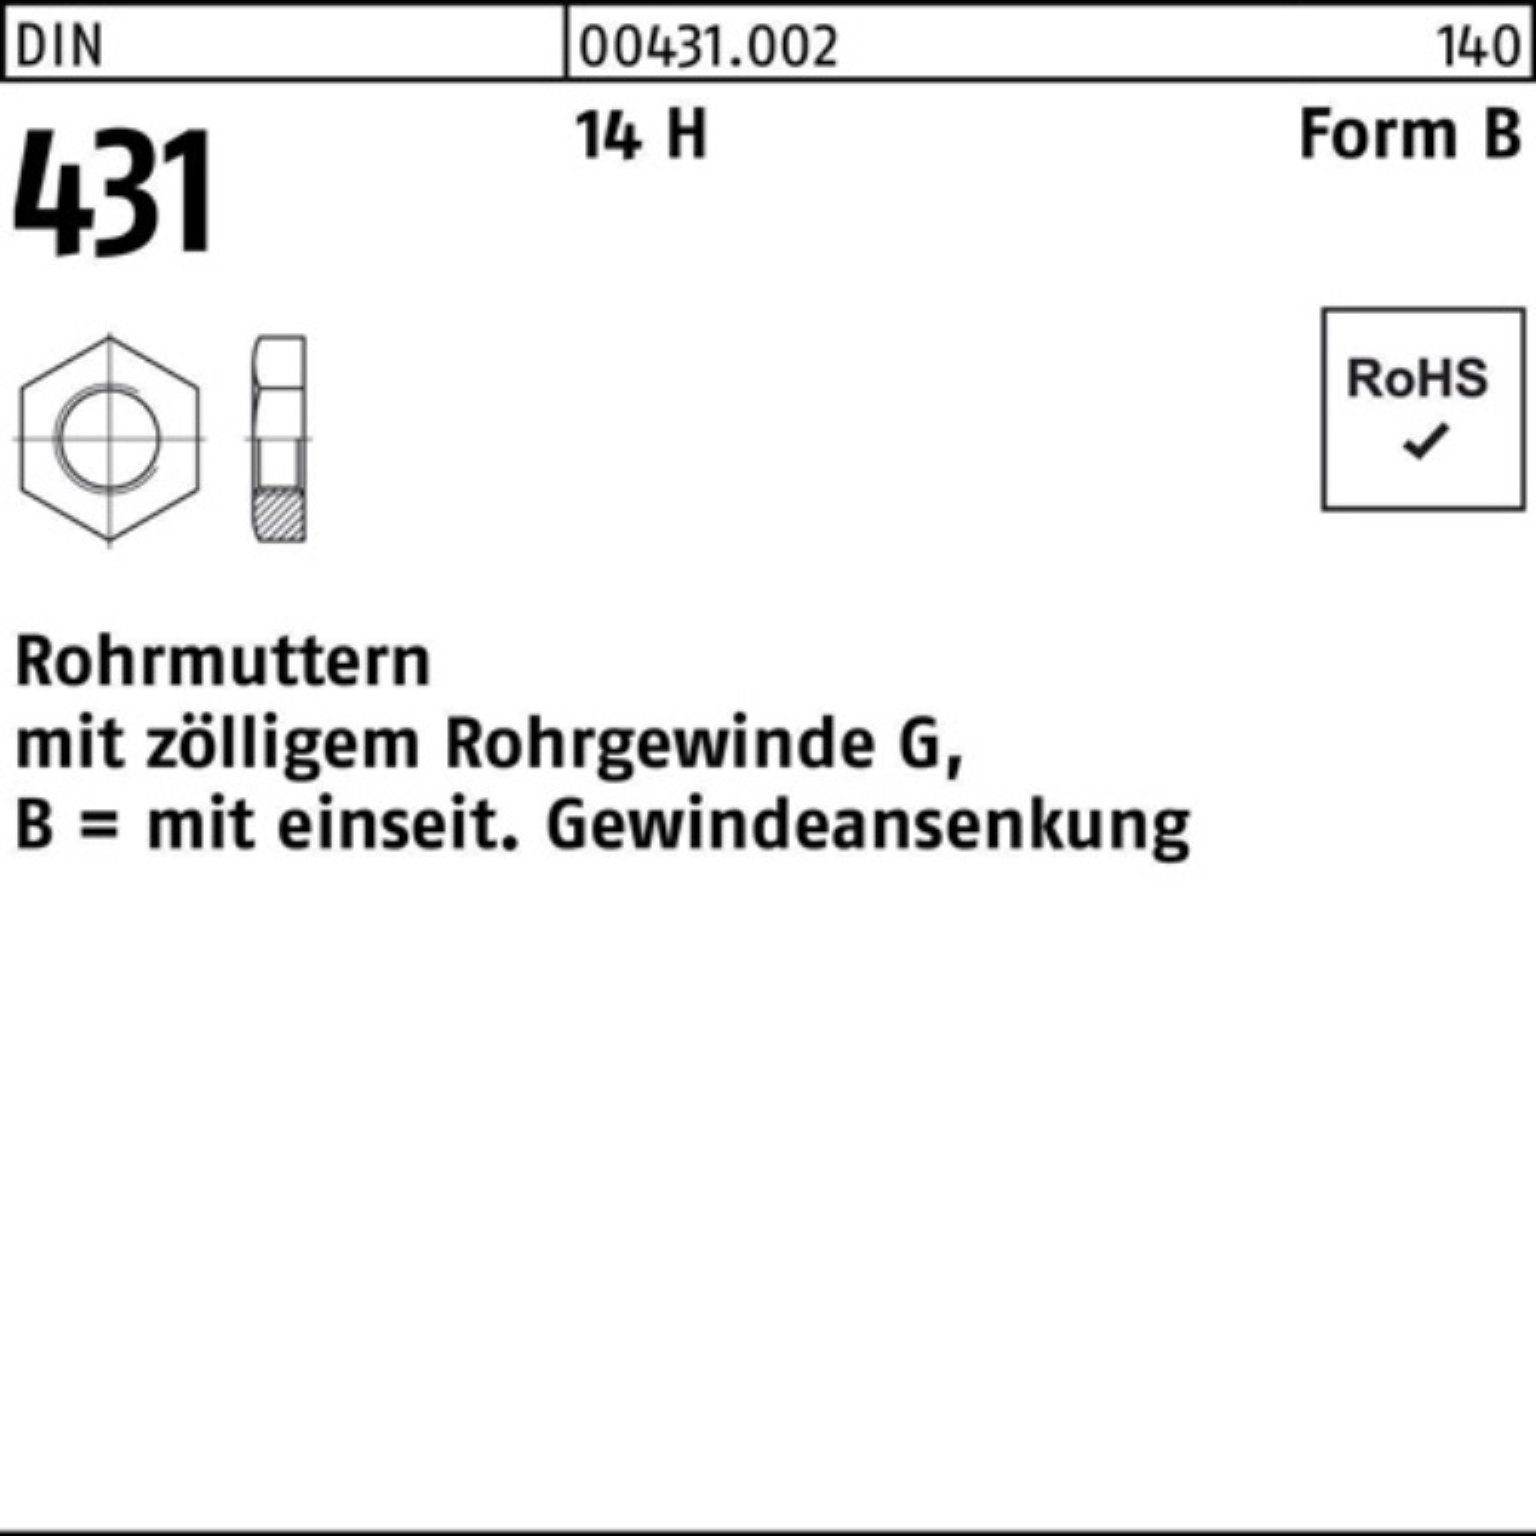 Reyher Rohrmutter 100er Pack Rohrmutter DIN 431 BG 1 3/4 14 H 1 Stück DIN 431 14 H Form